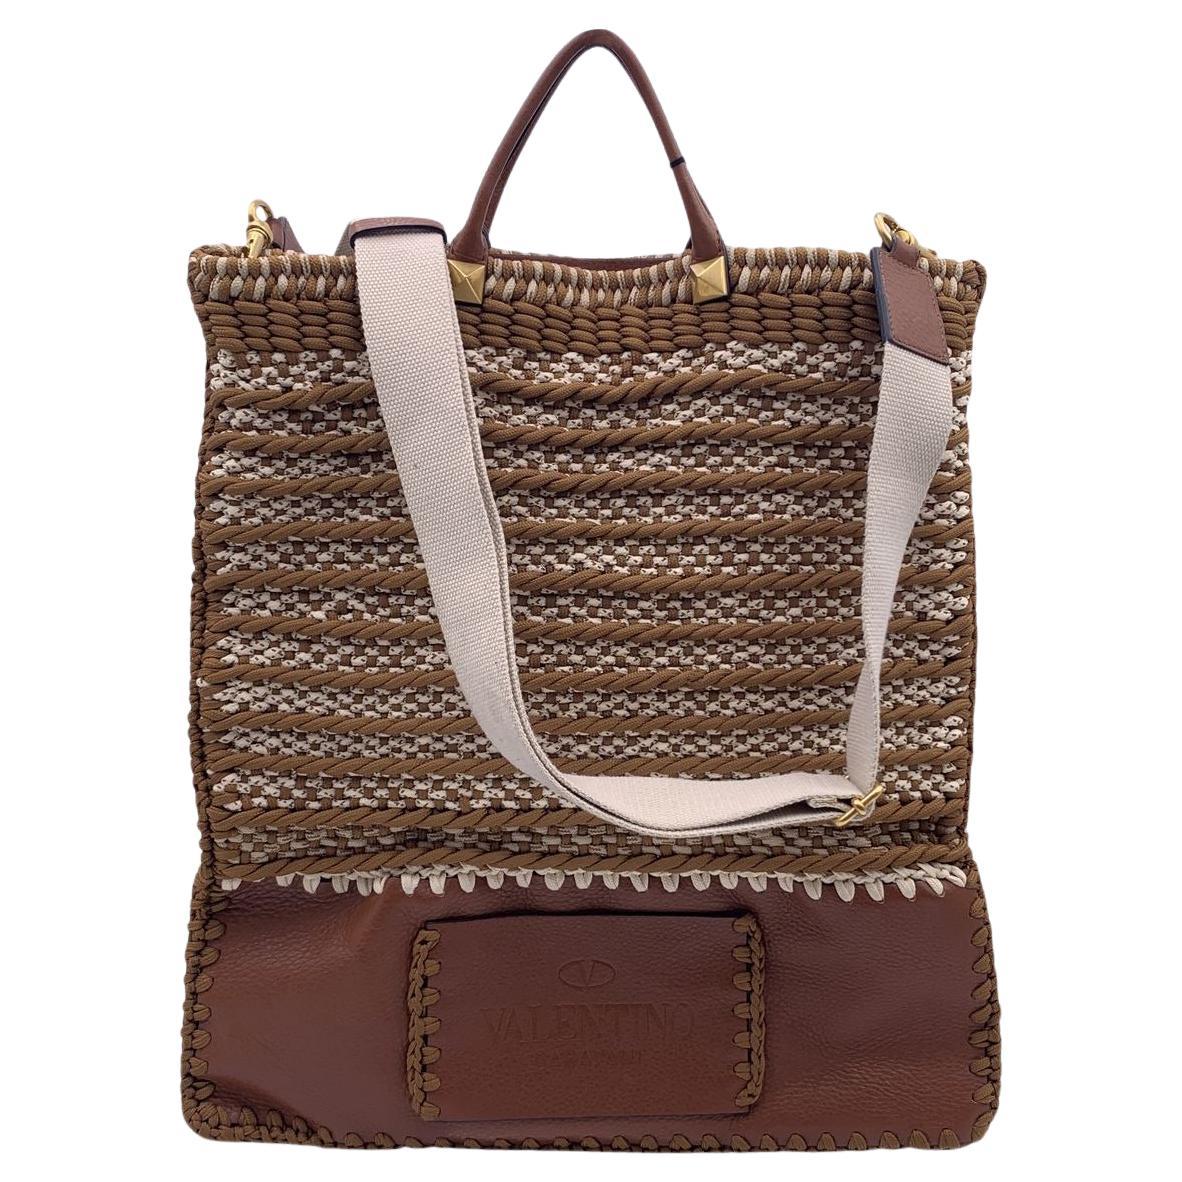 Valentino Garavani Rockstud Brown Leather and Crochet Tote Bag For Sale